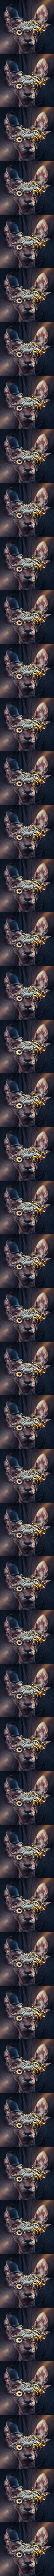 Steampunked #004 - Steampunk Sphynx Cat